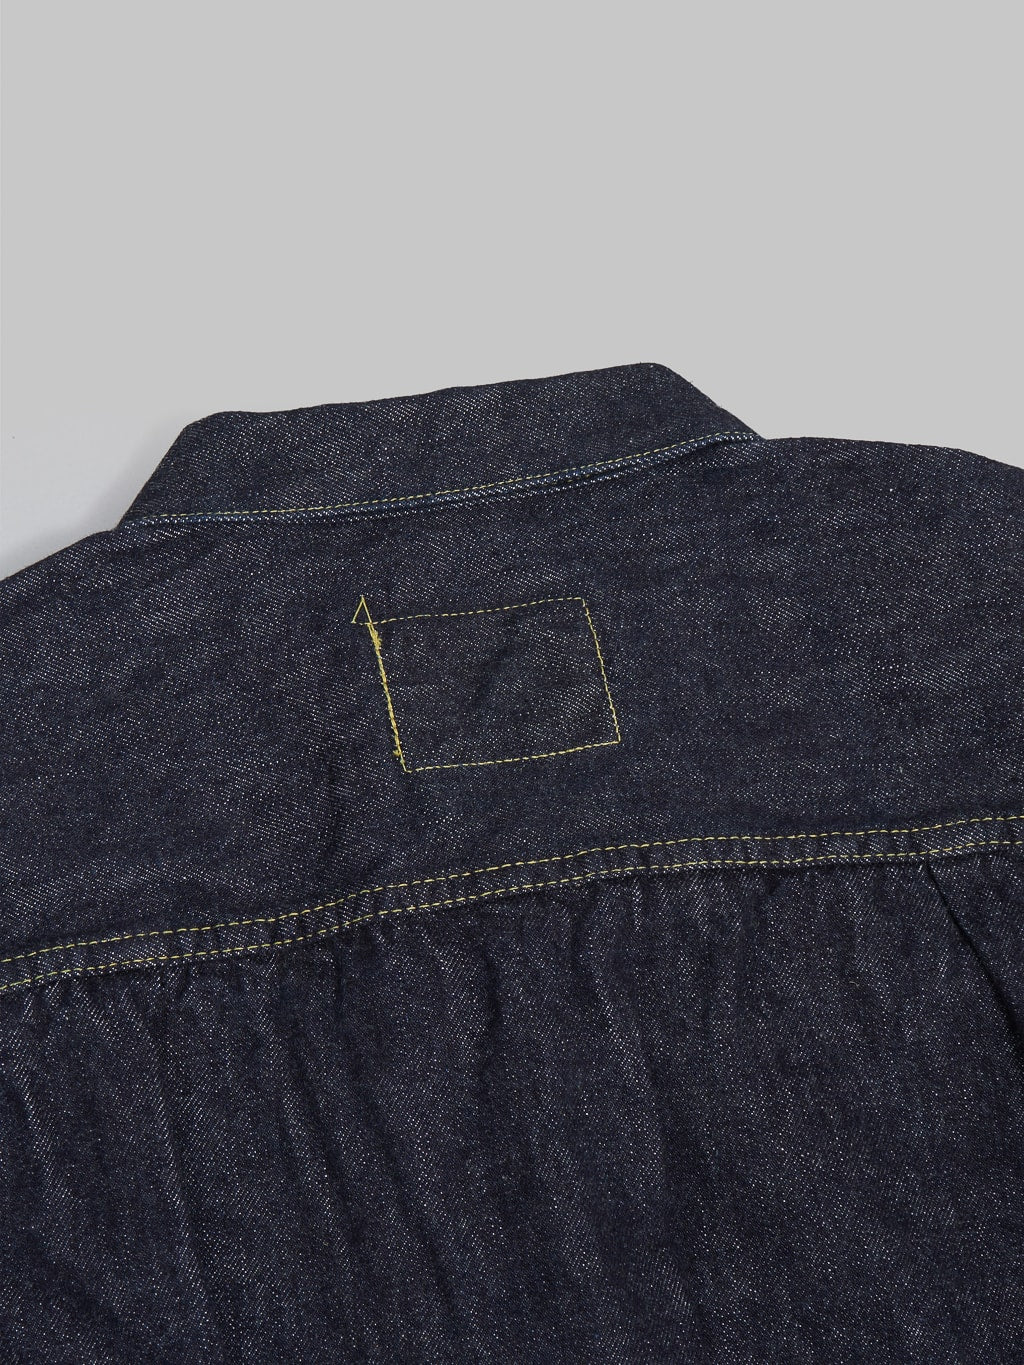 tcb 40s denim jacket back collar stitching